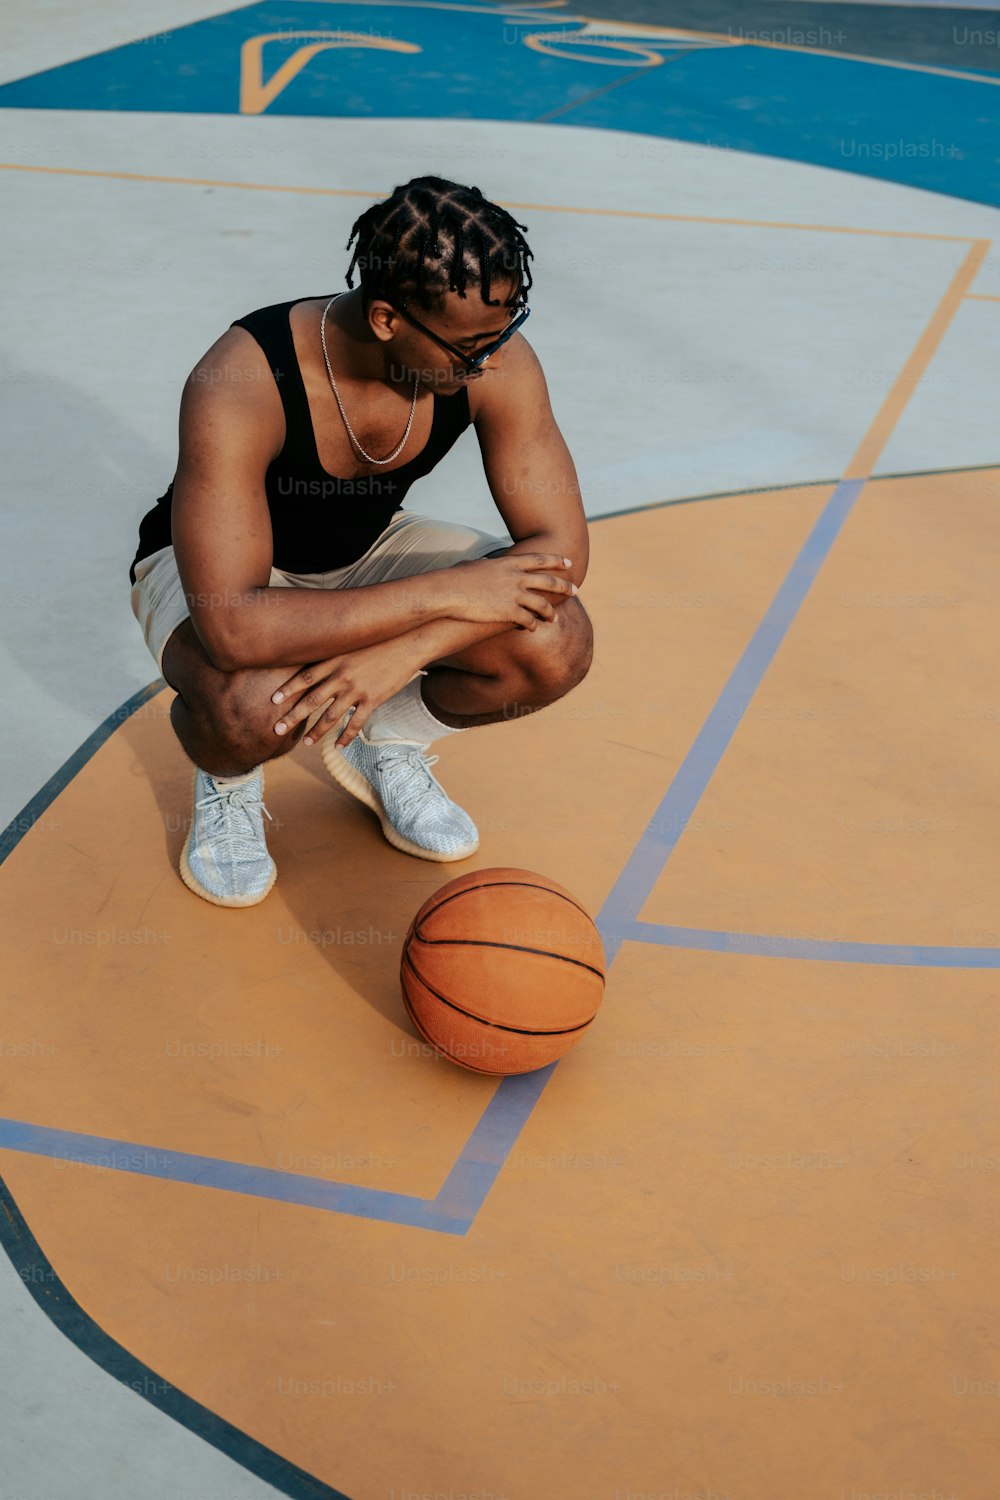 Une femme assise sur un terrain de basket-ball tenant un ballon de basket-ball